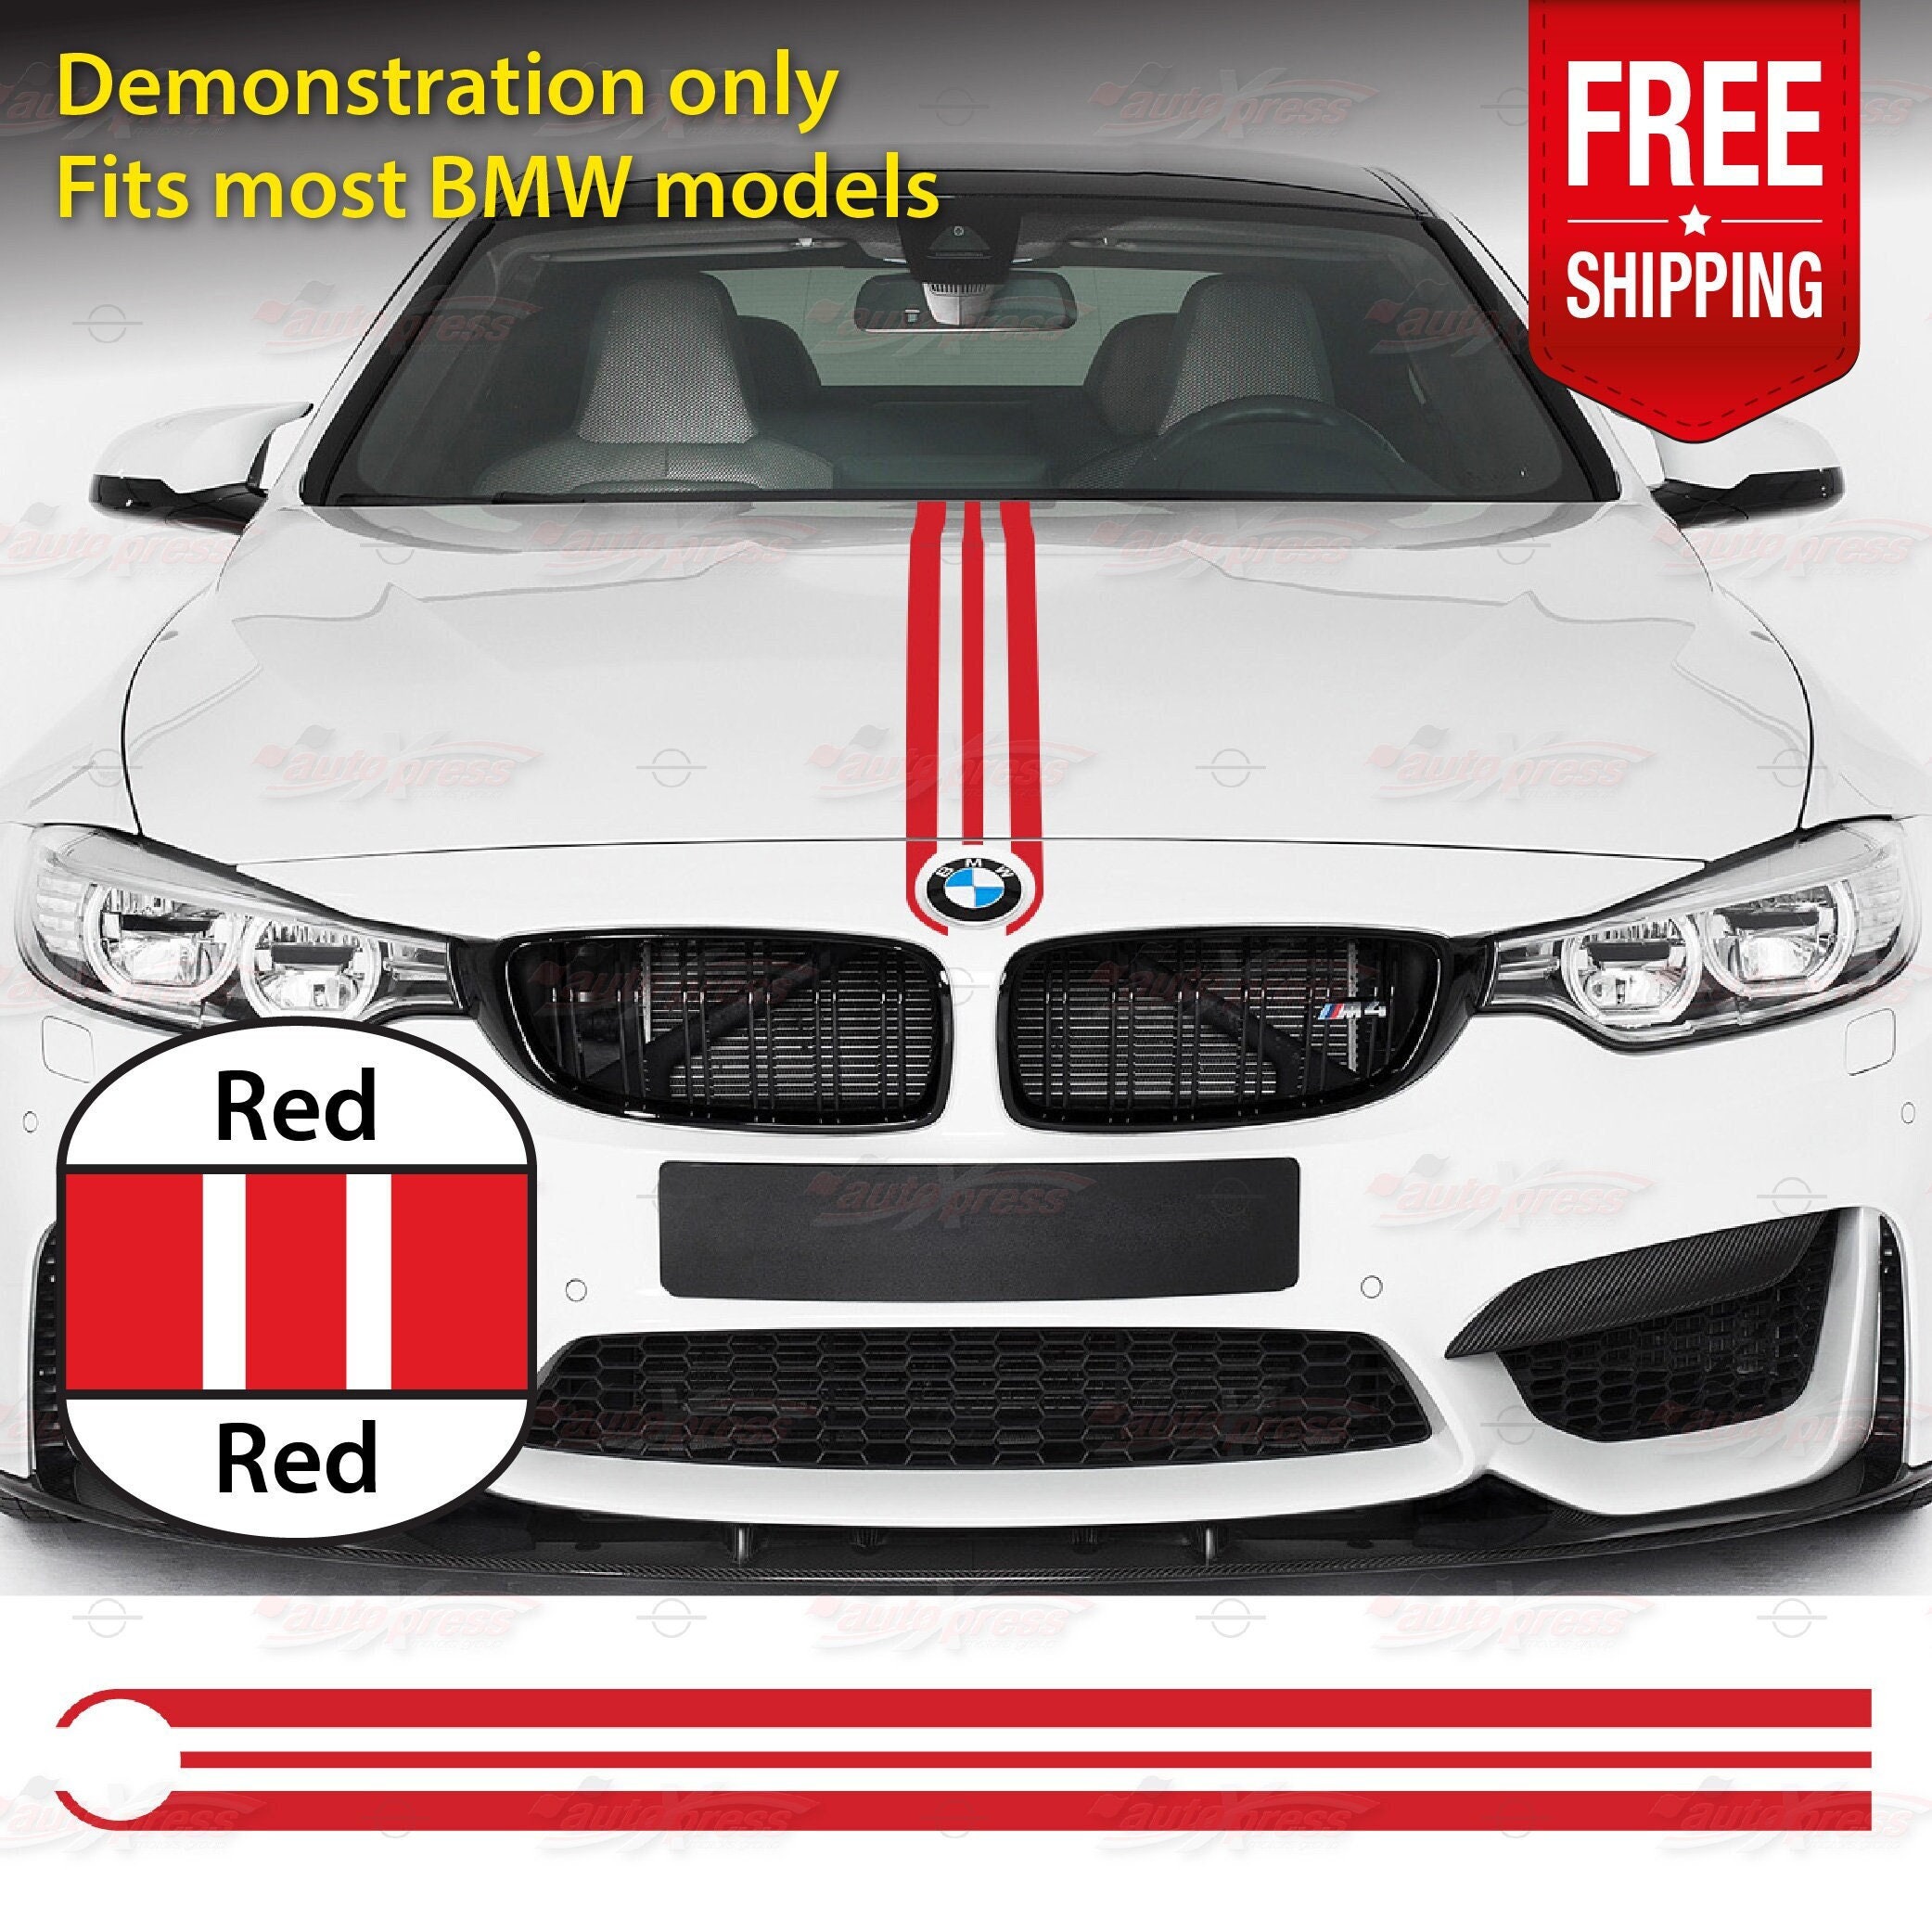 Stickers Autocollants Powered by BMW M Motorsport - 3M Pro GTStickers